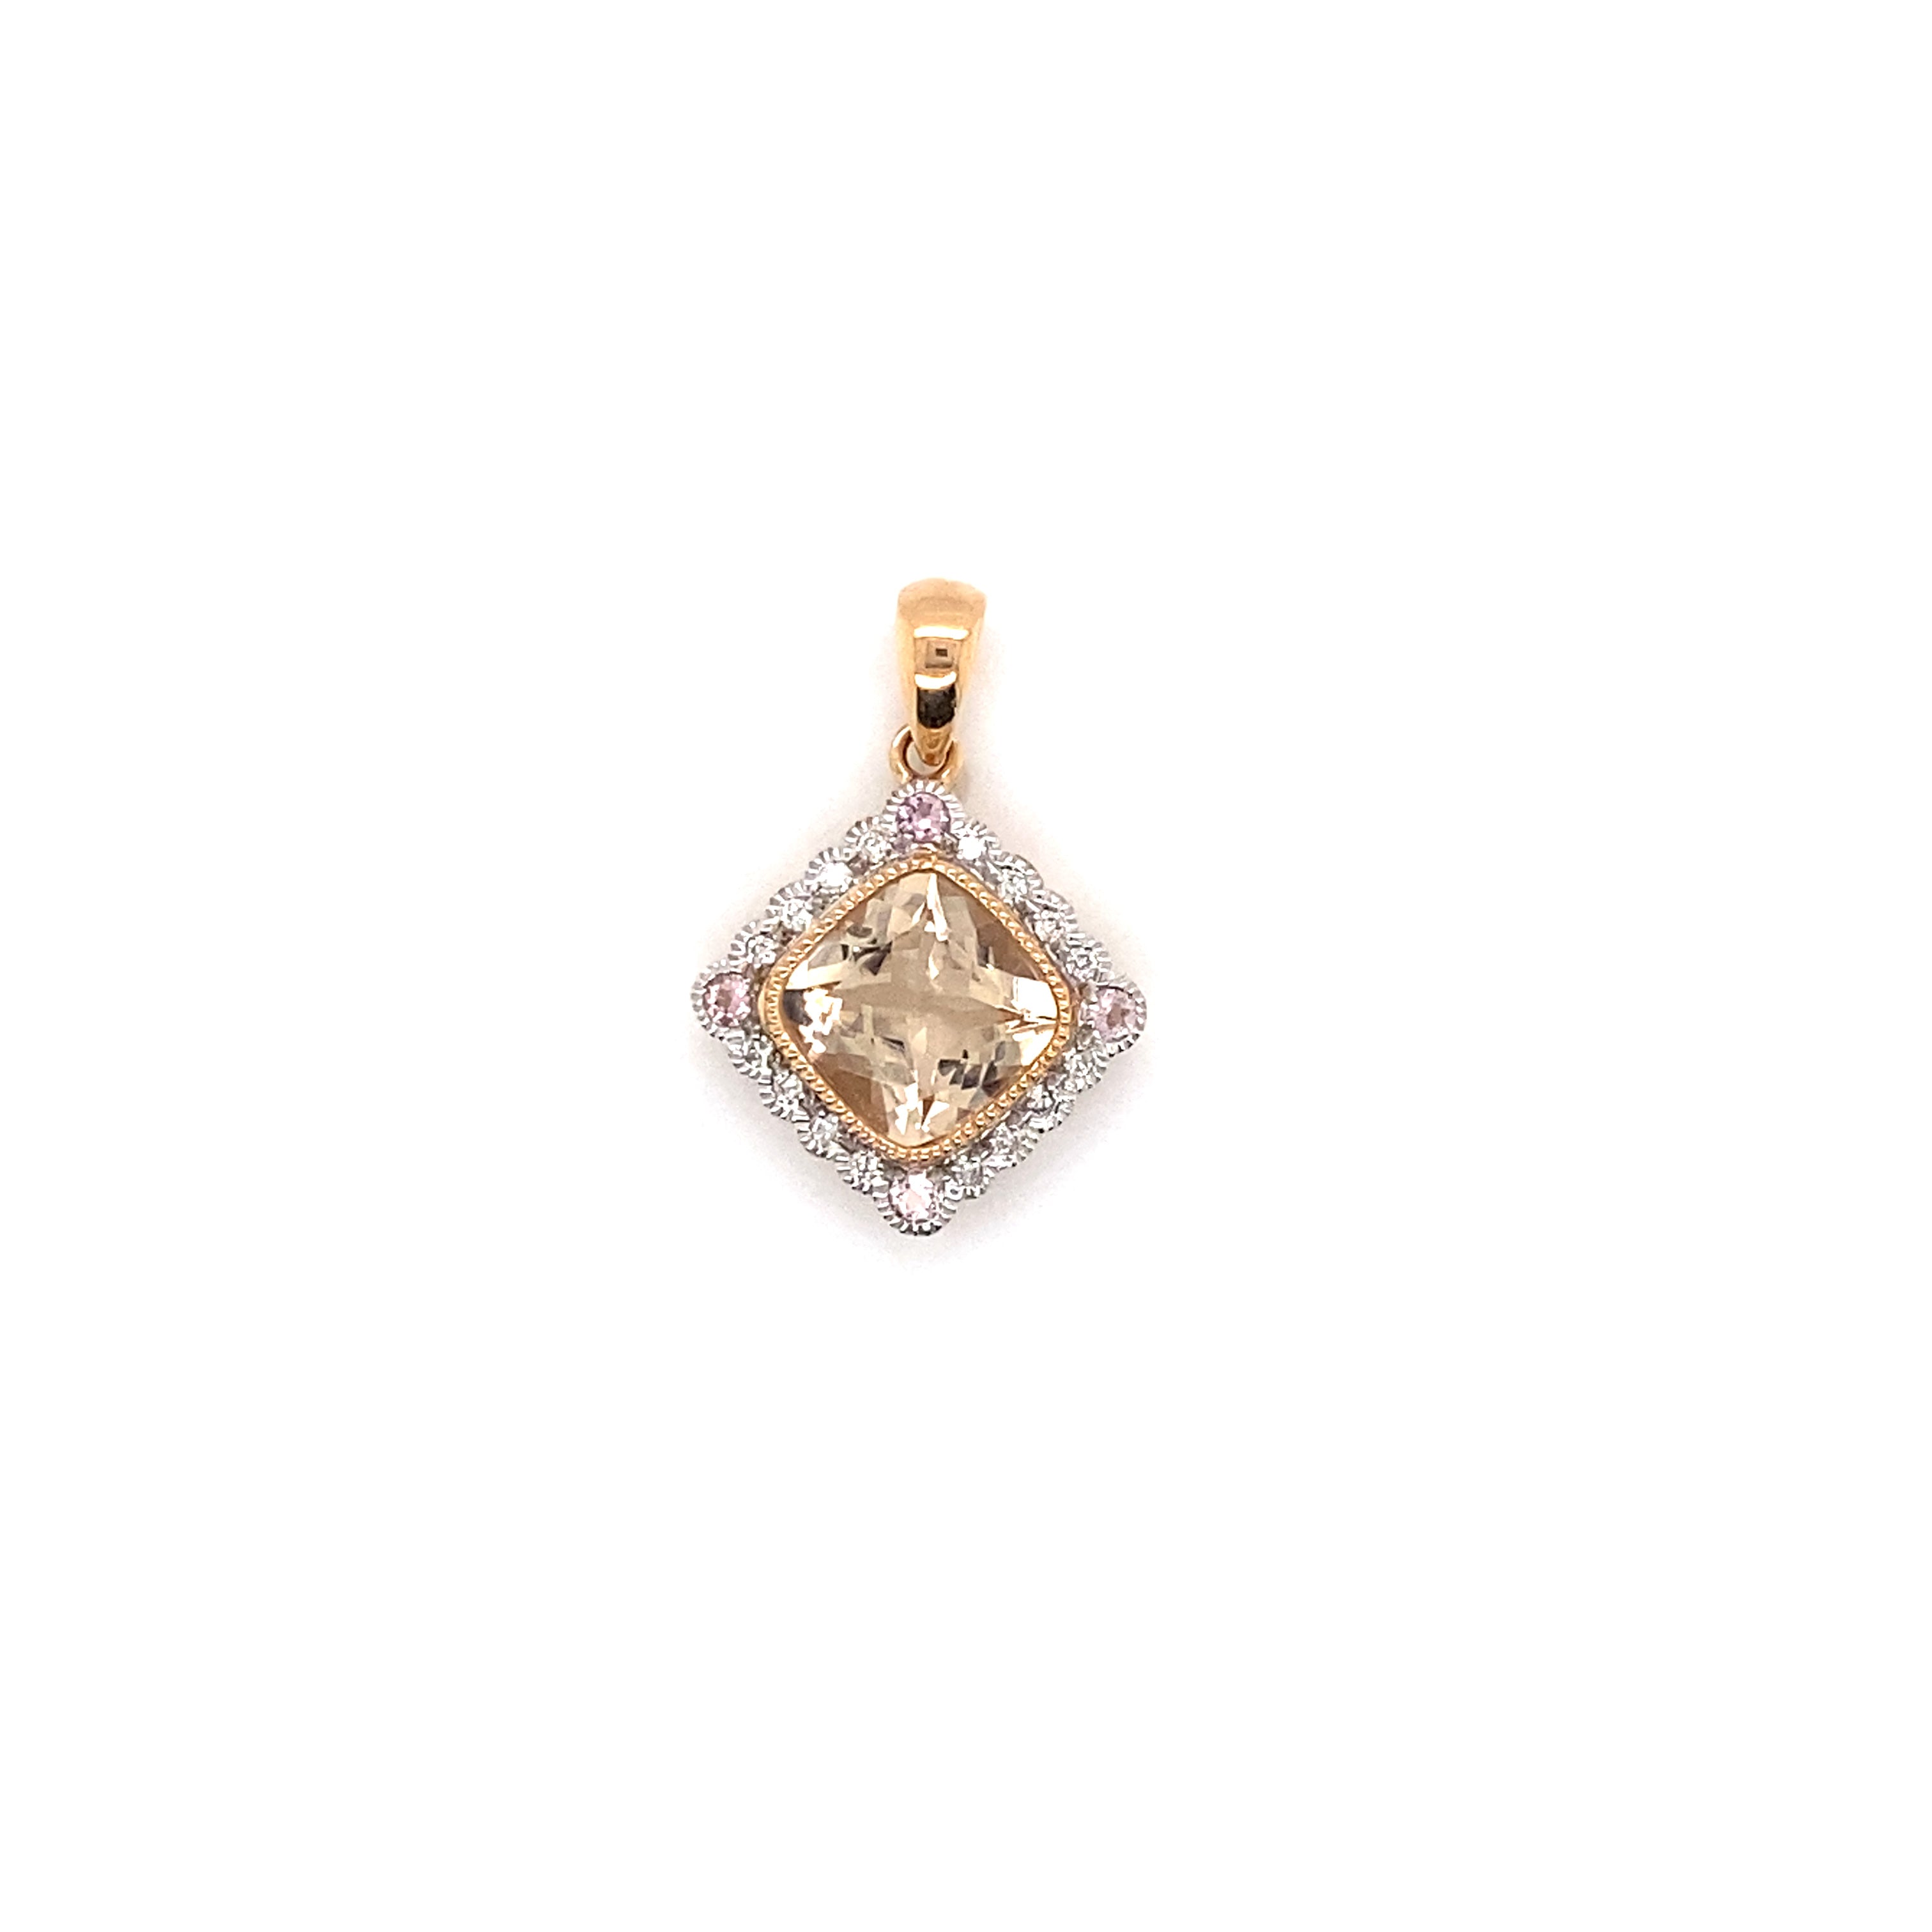 9ct rose gold morganite and diamond pendant.